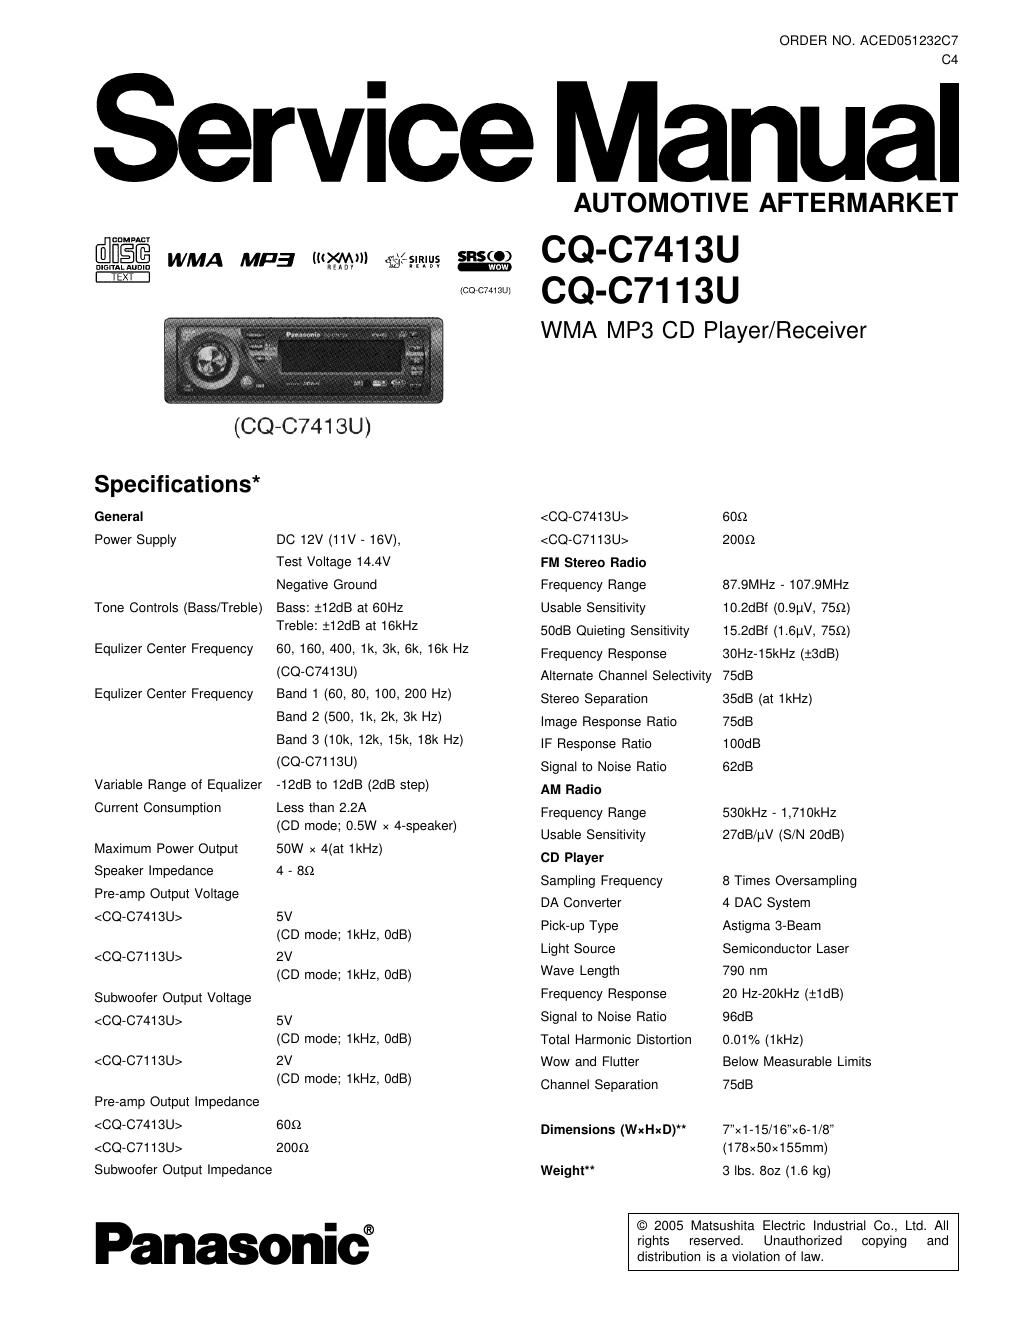 panasonic cq c 7113 u service manual